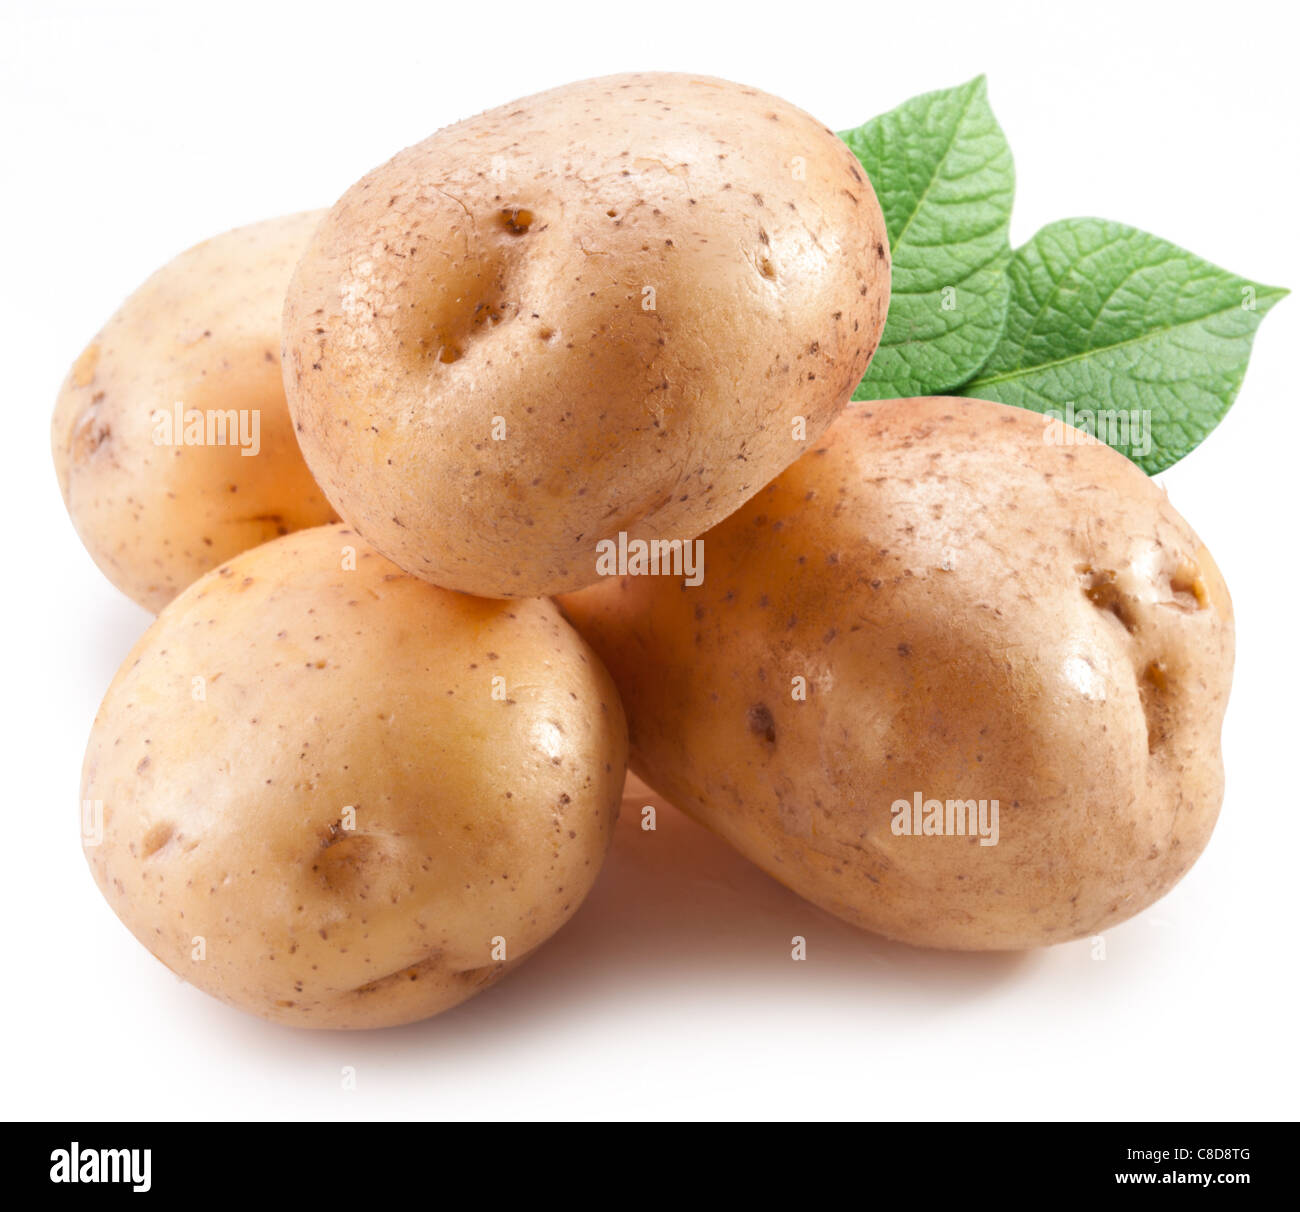 Potatoes on a white background. Stock Photo